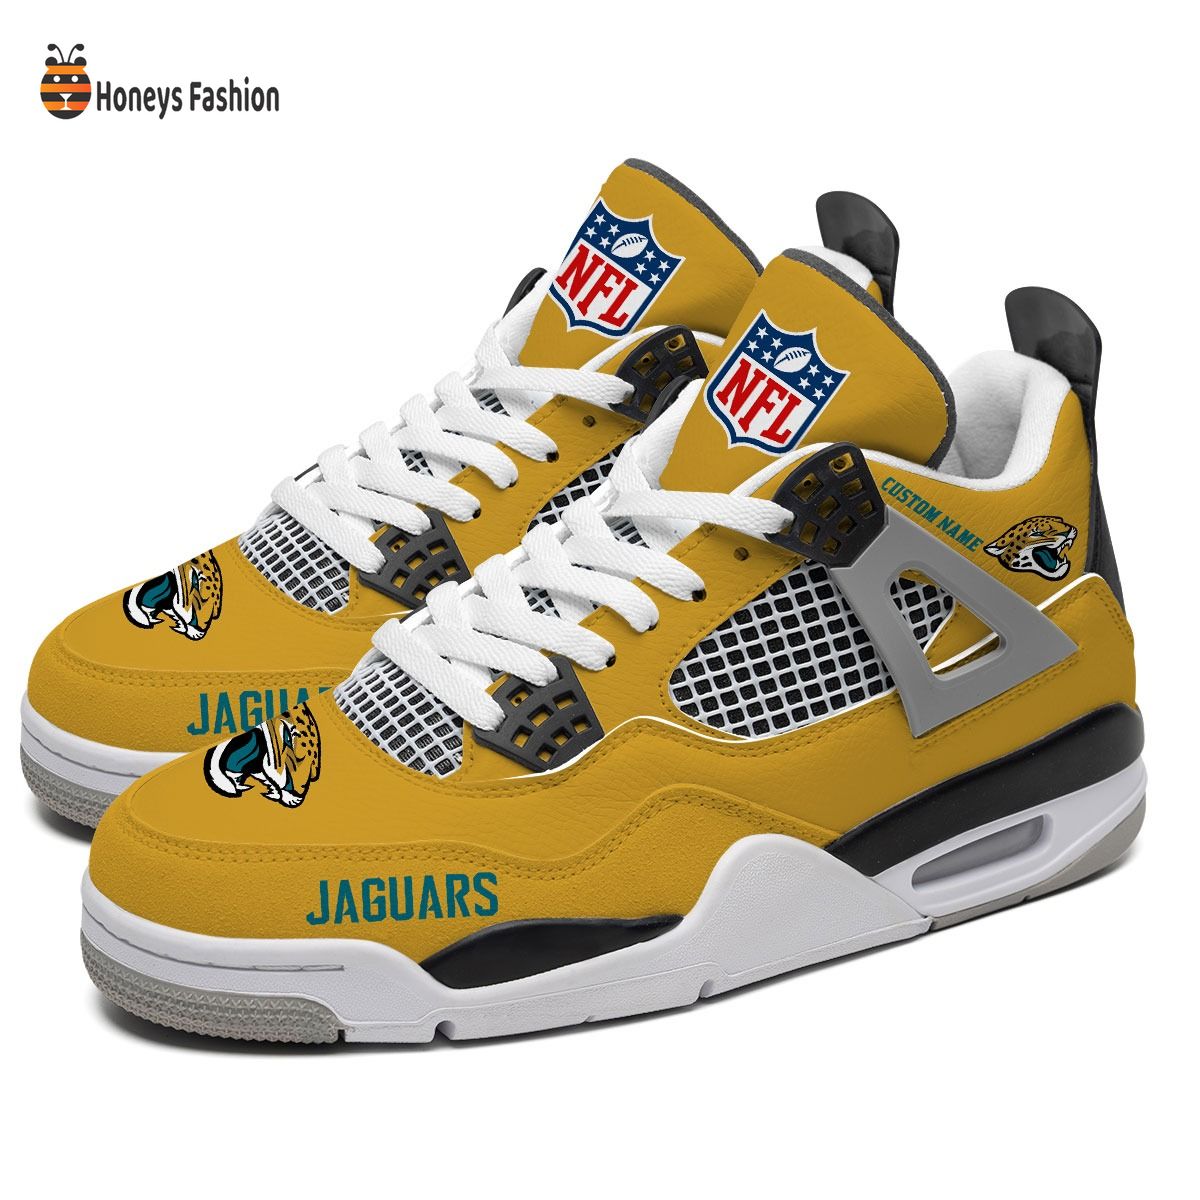 Jacksonville Jaguars NFL Air Jordan 4 Shoes